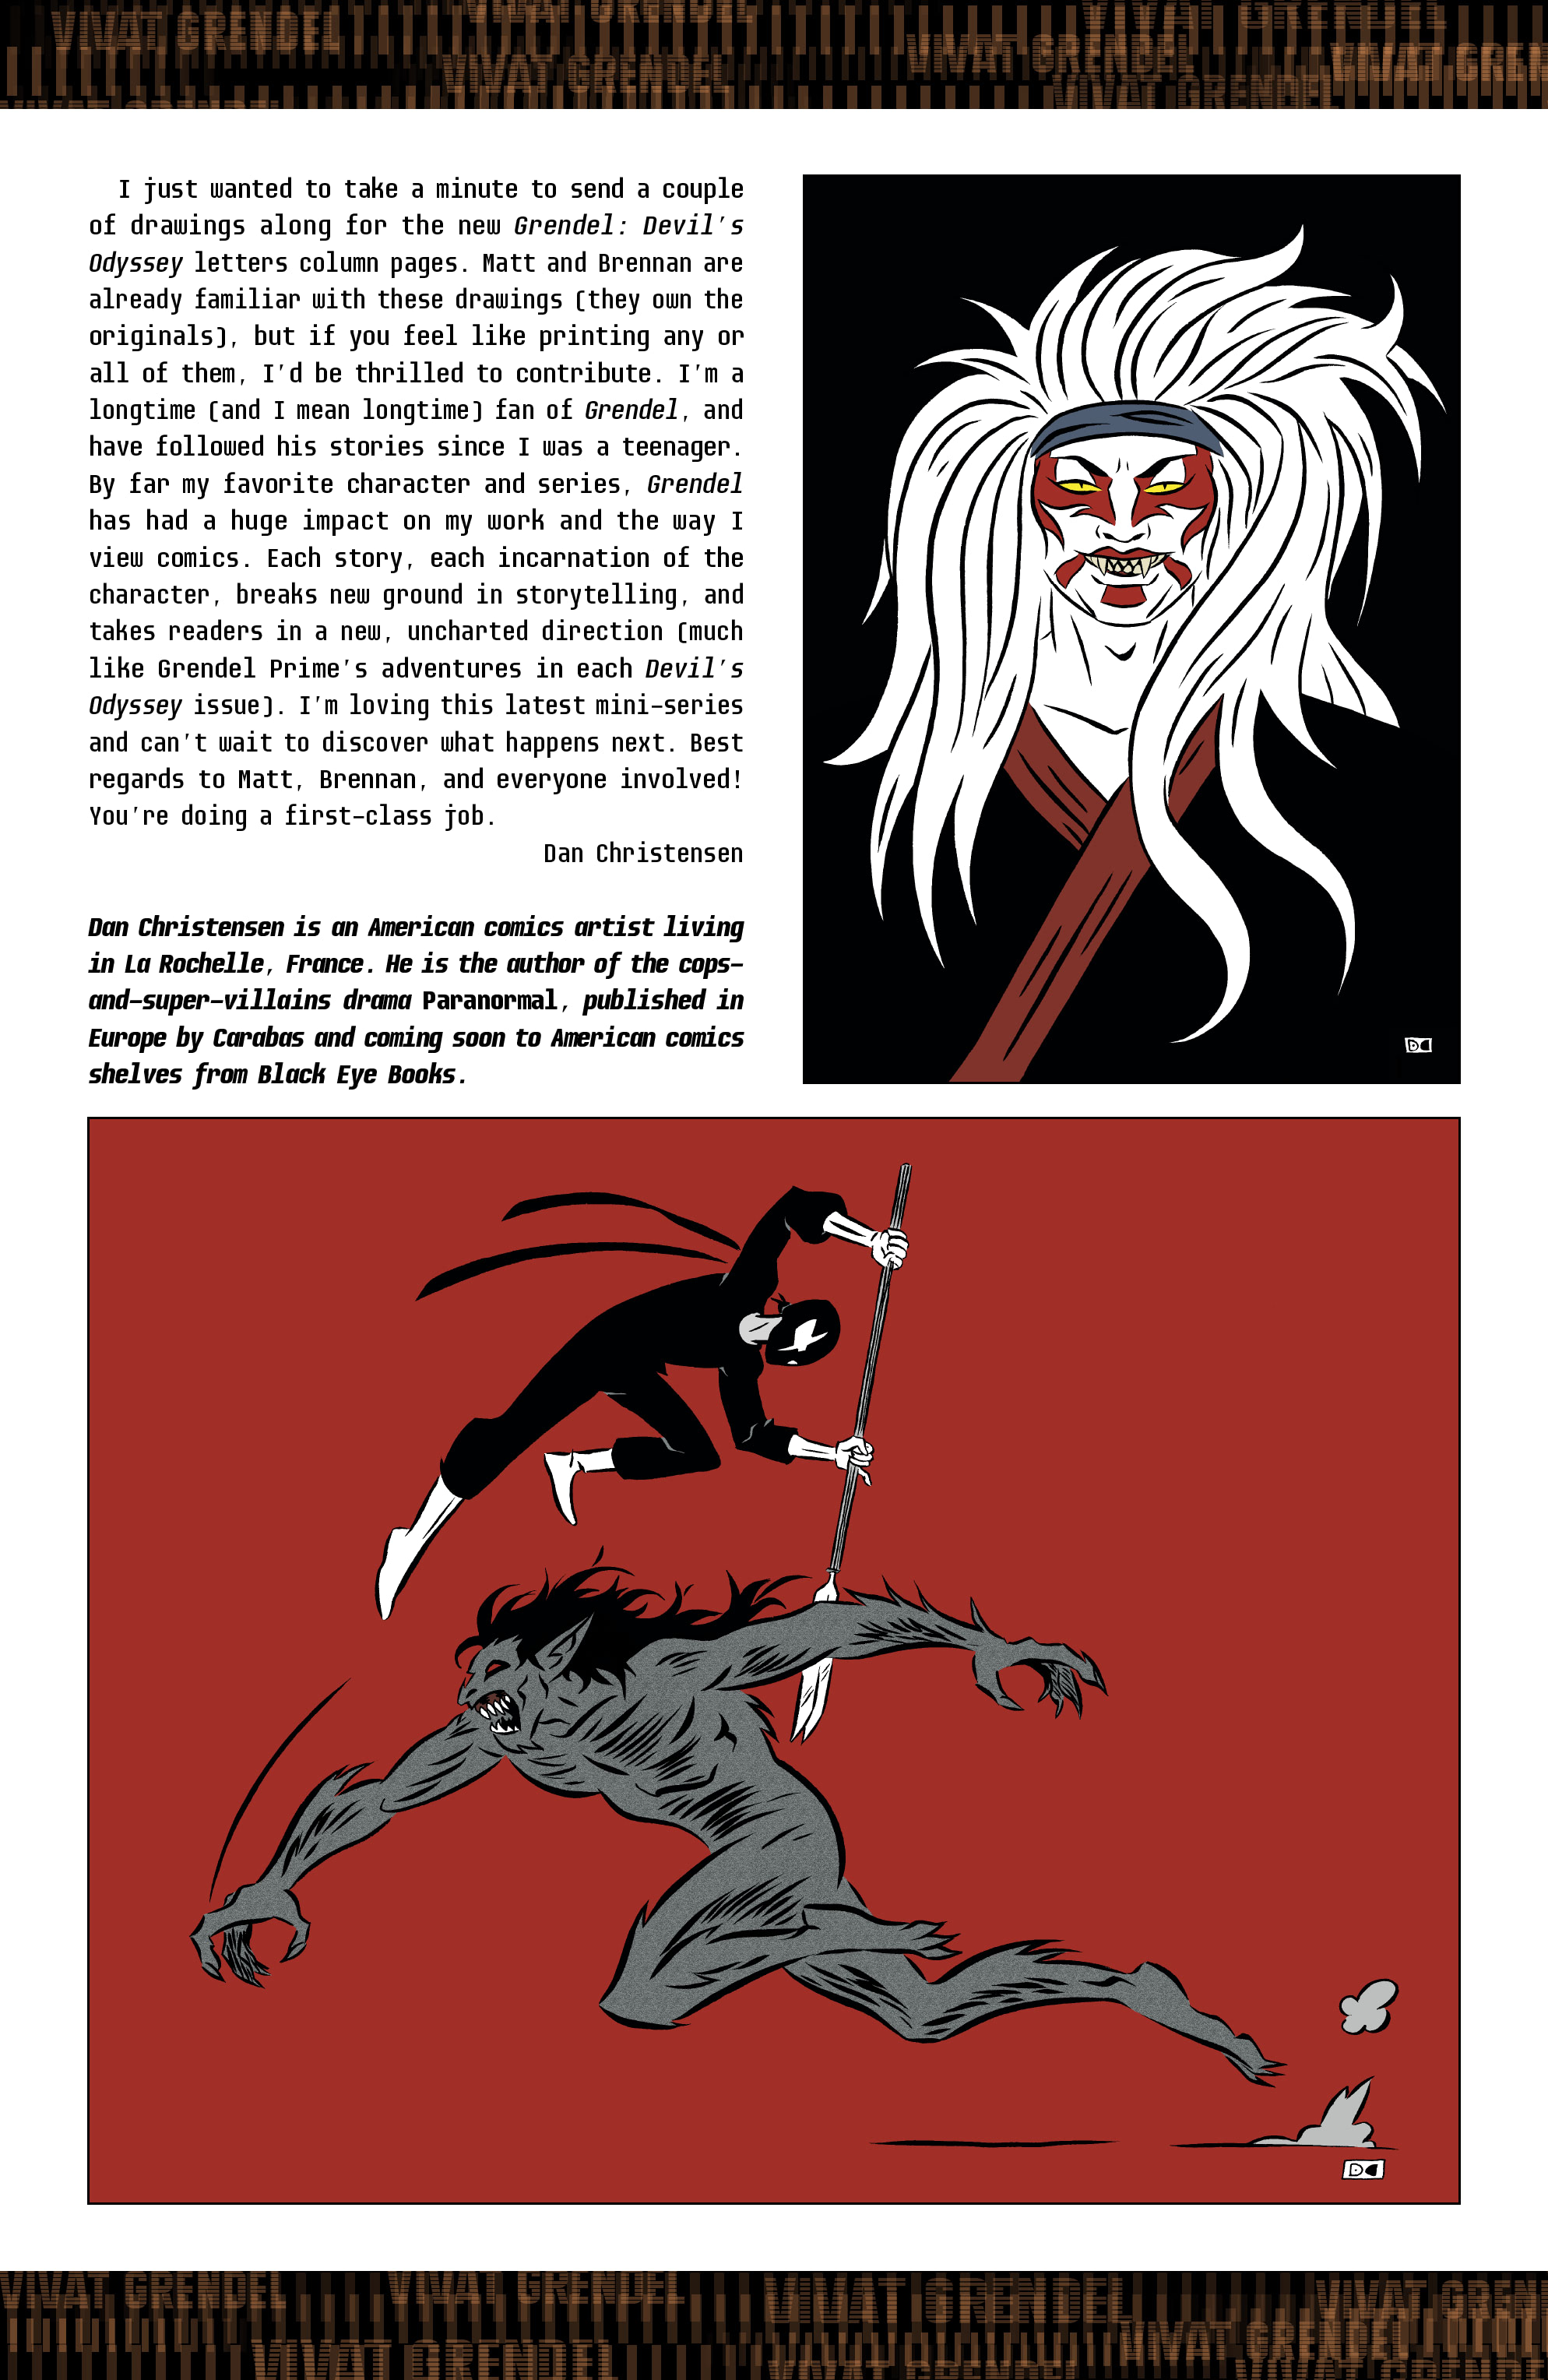 Read online Grendel: Devil's Odyssey comic -  Issue #8 - 24